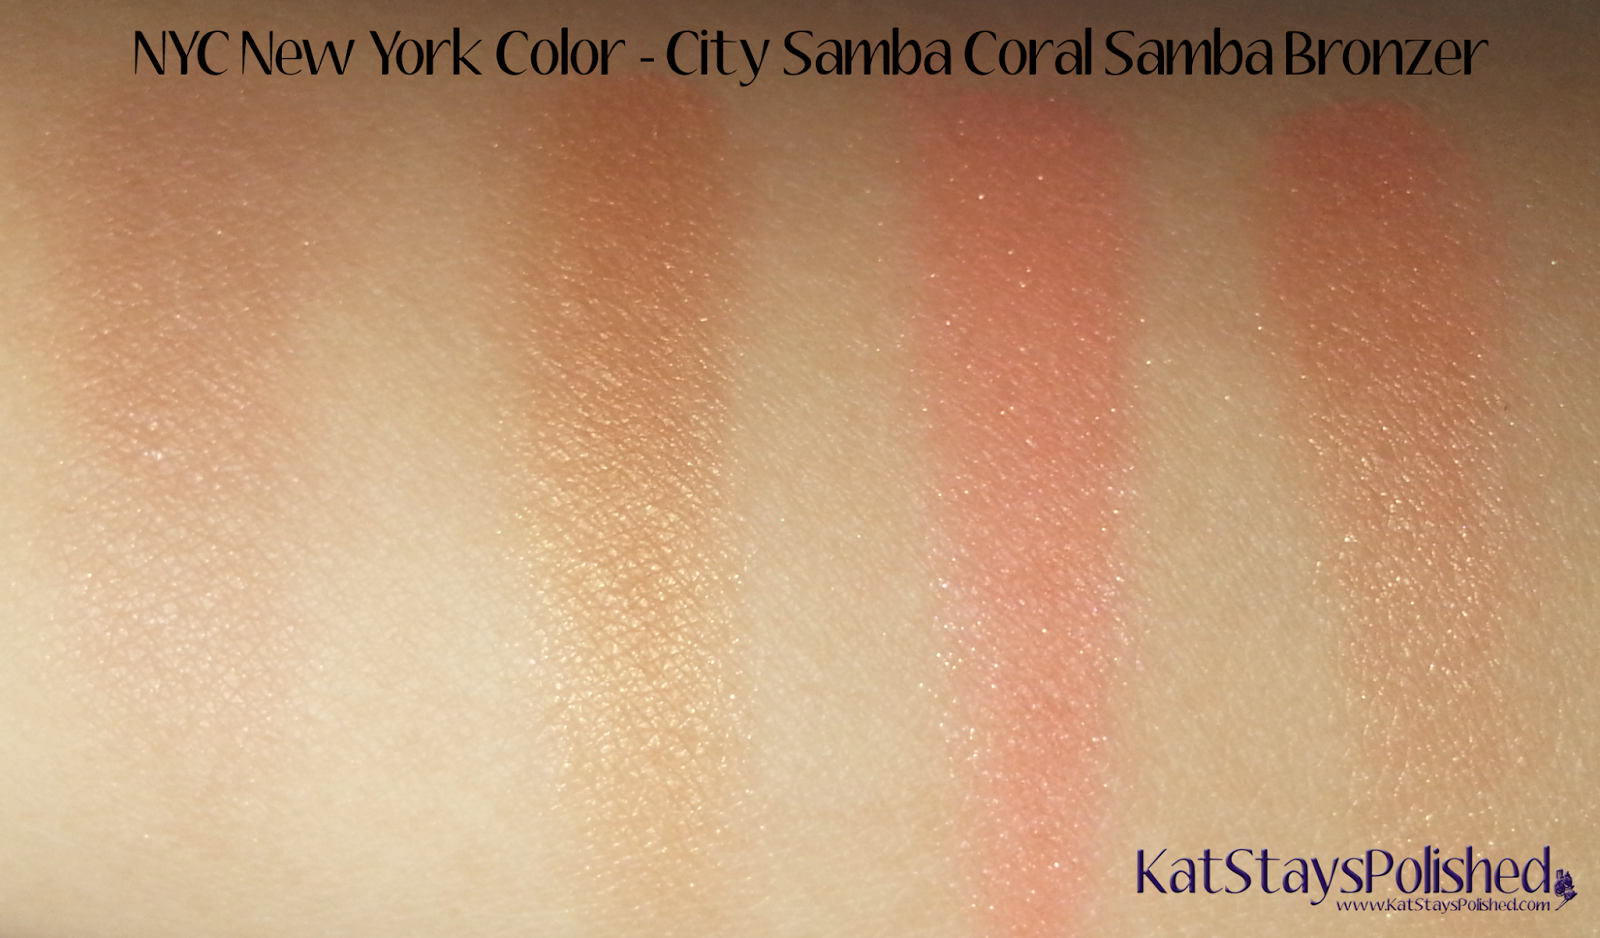 NYC New York Color - City Samba Sun 'n' Bronze - Coral Samba Bronzer Swatches | Kat Stays Polished